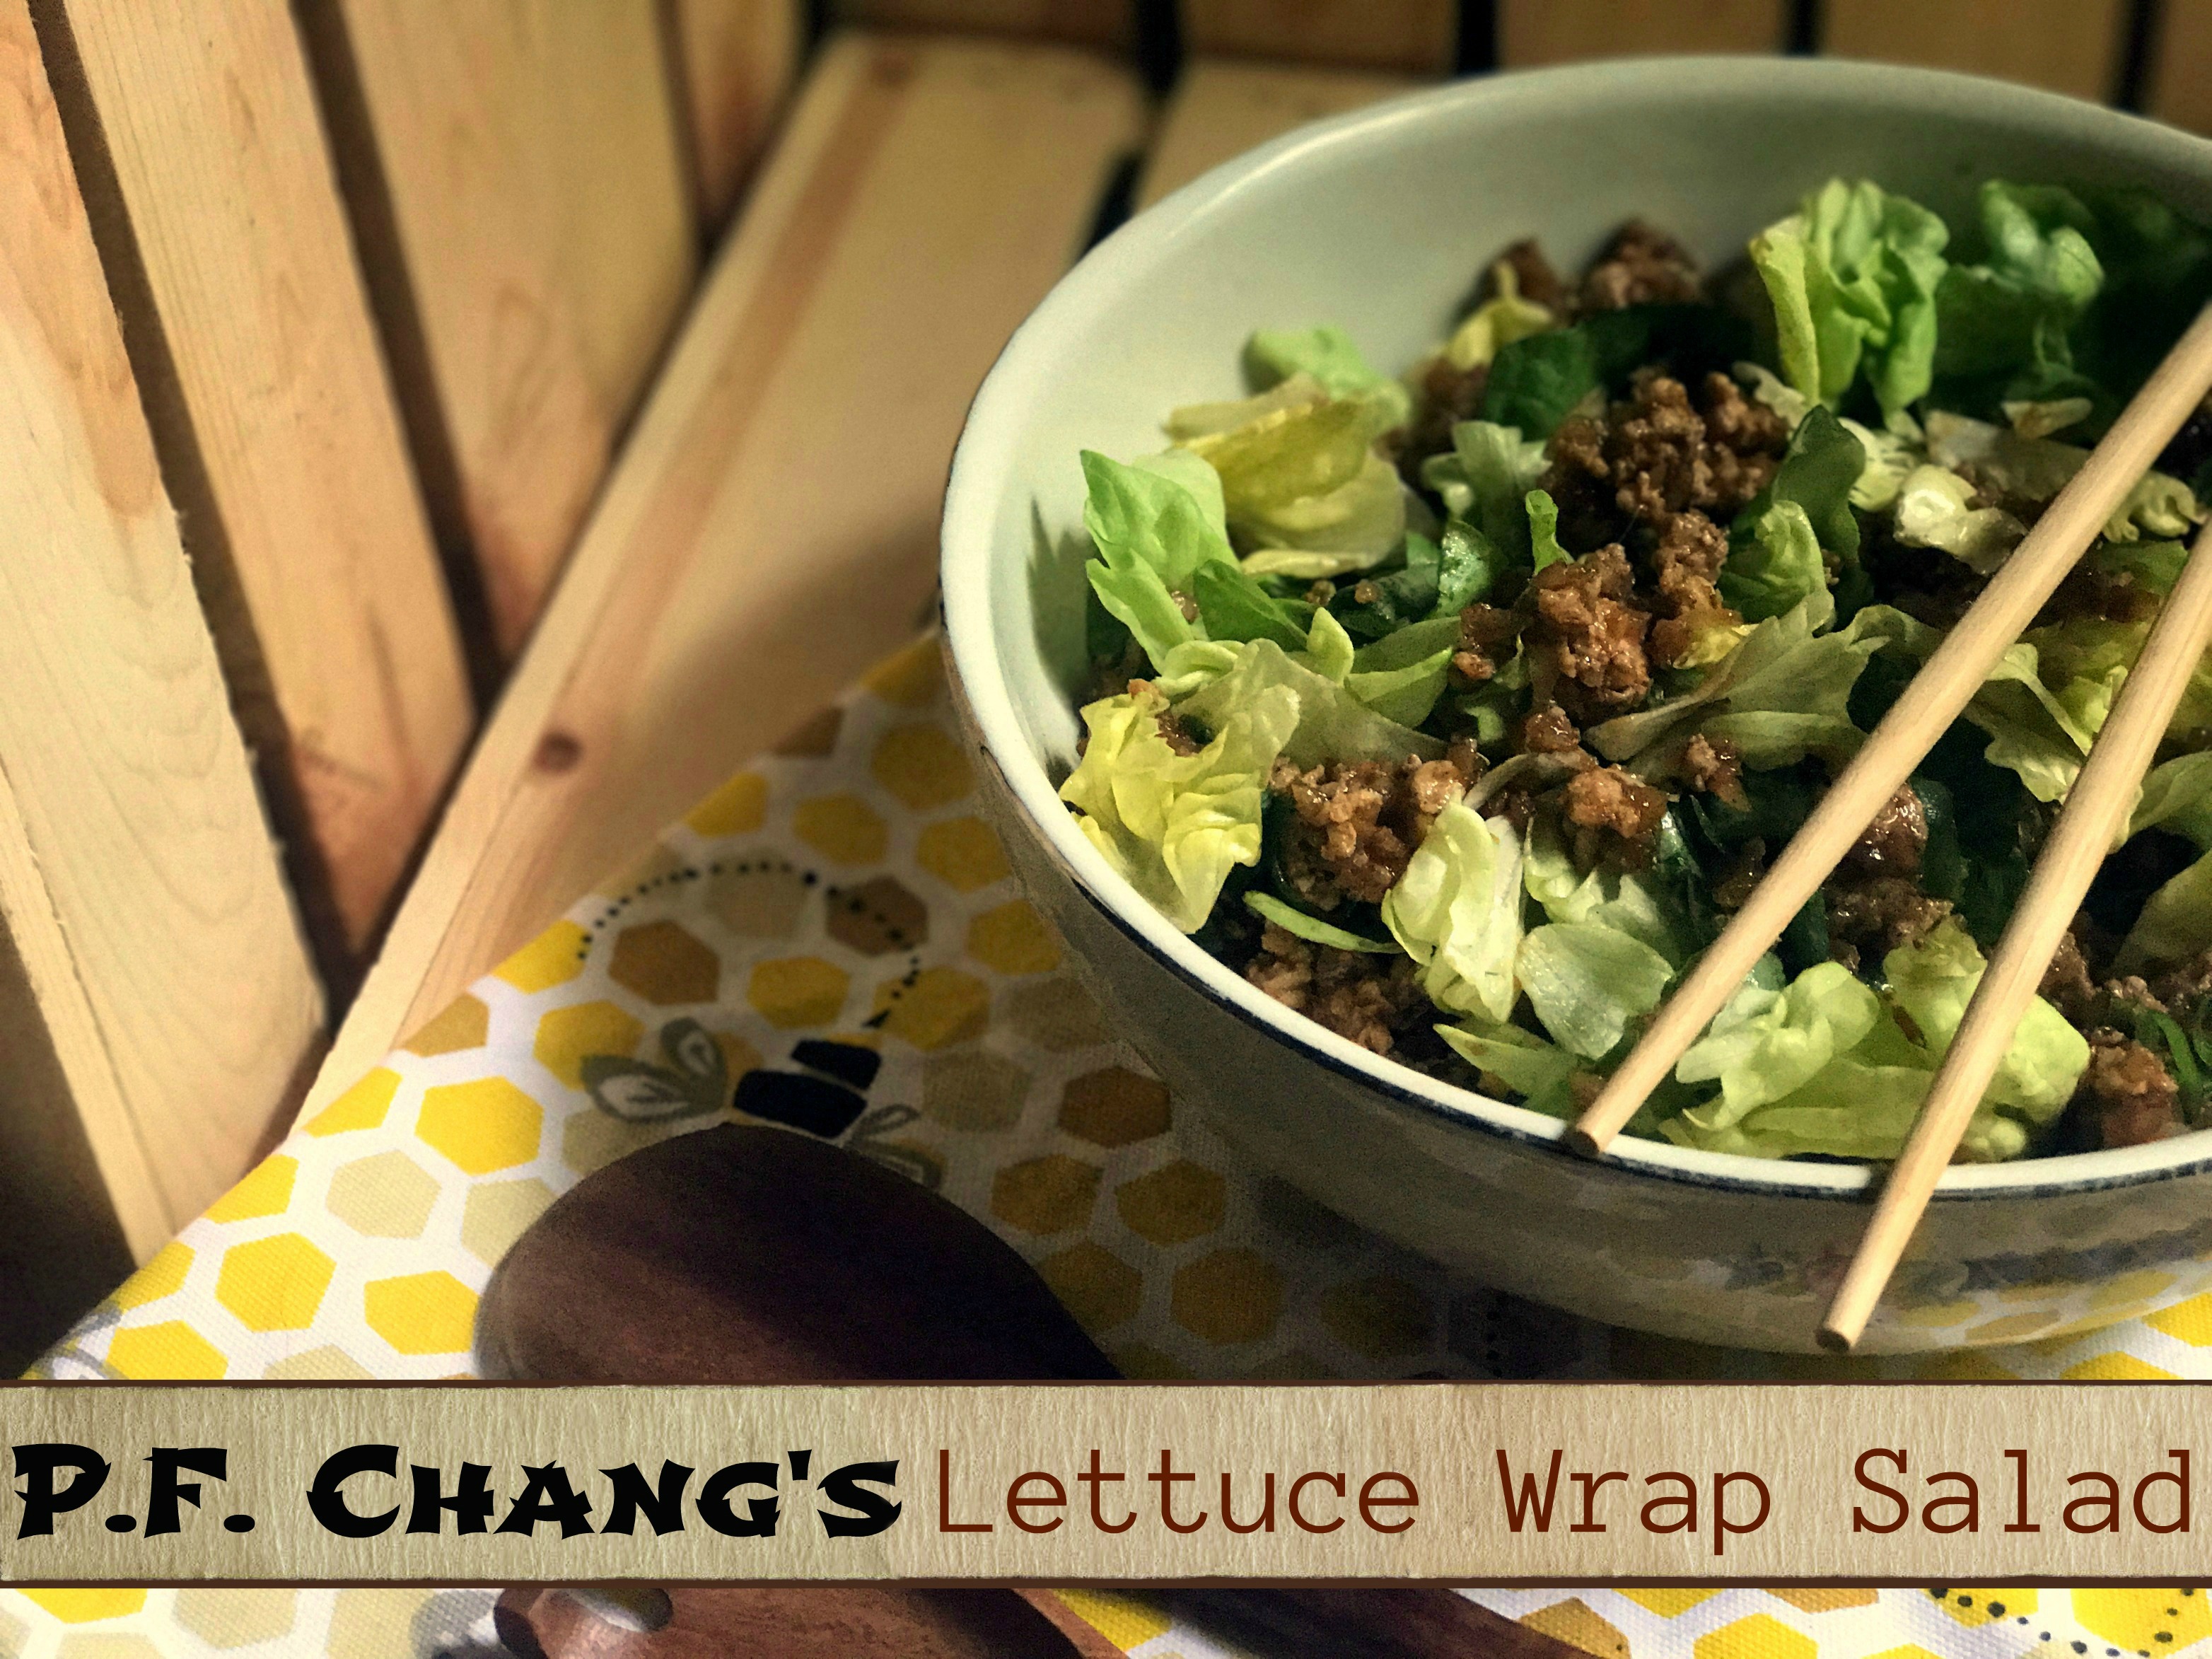 P.F. Chang’s Lettuce Wrap Salad